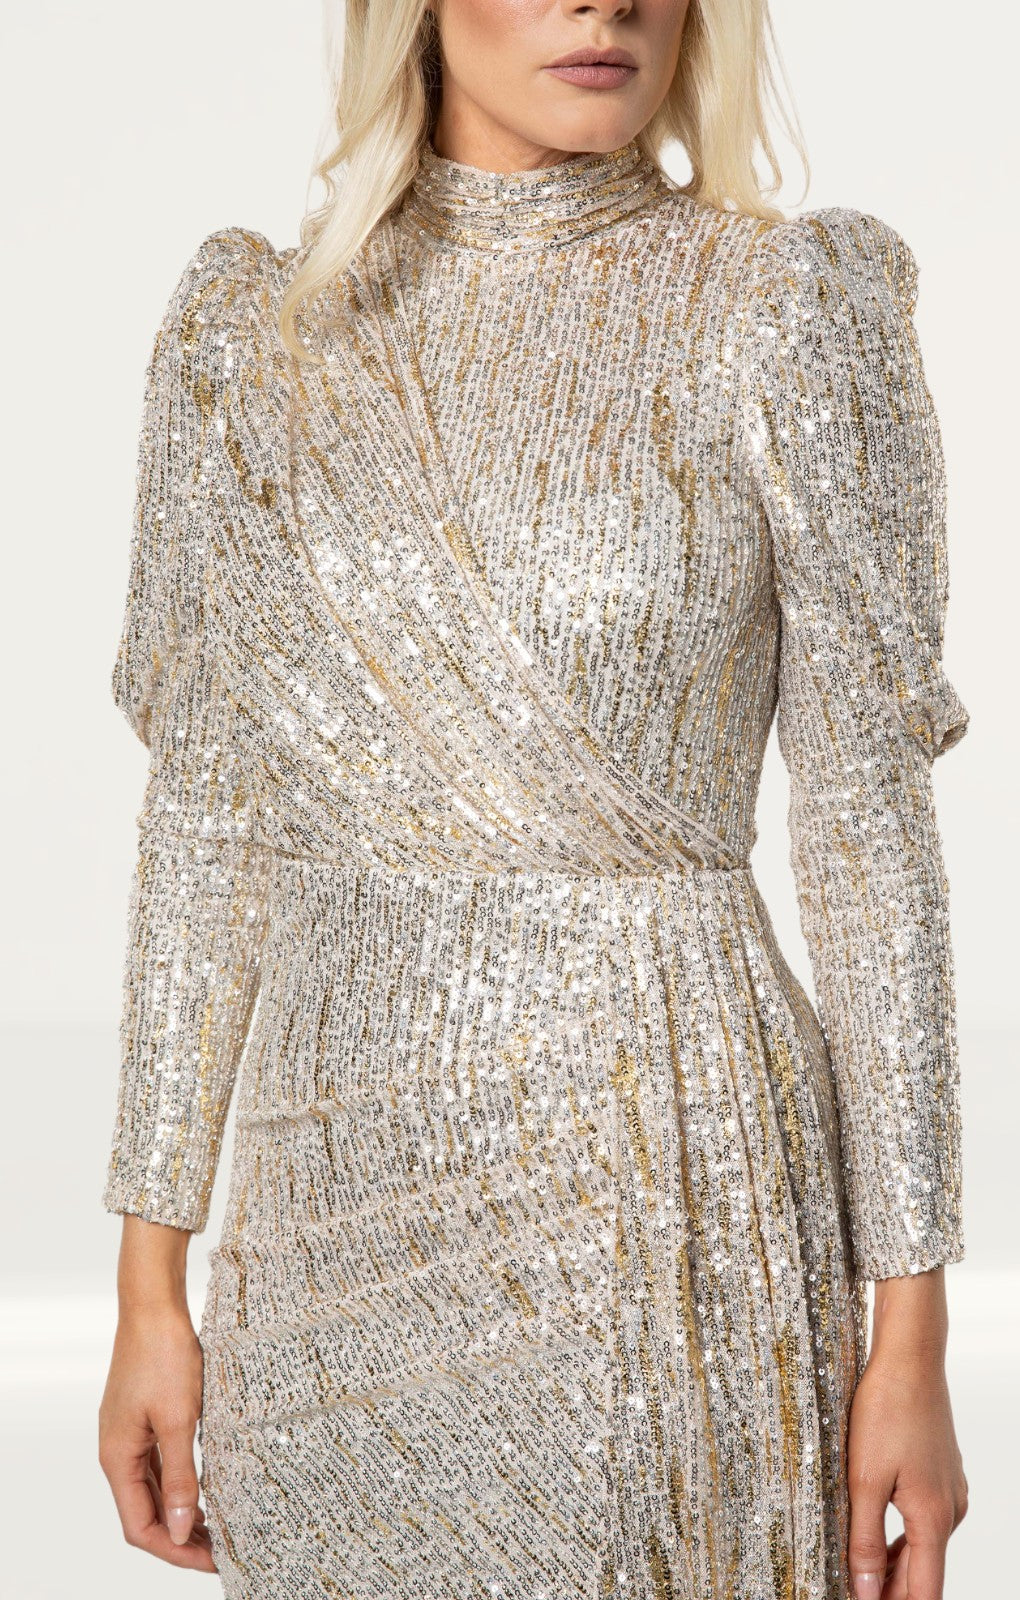 Saylor Bianca Gold Sequin Mini Dress